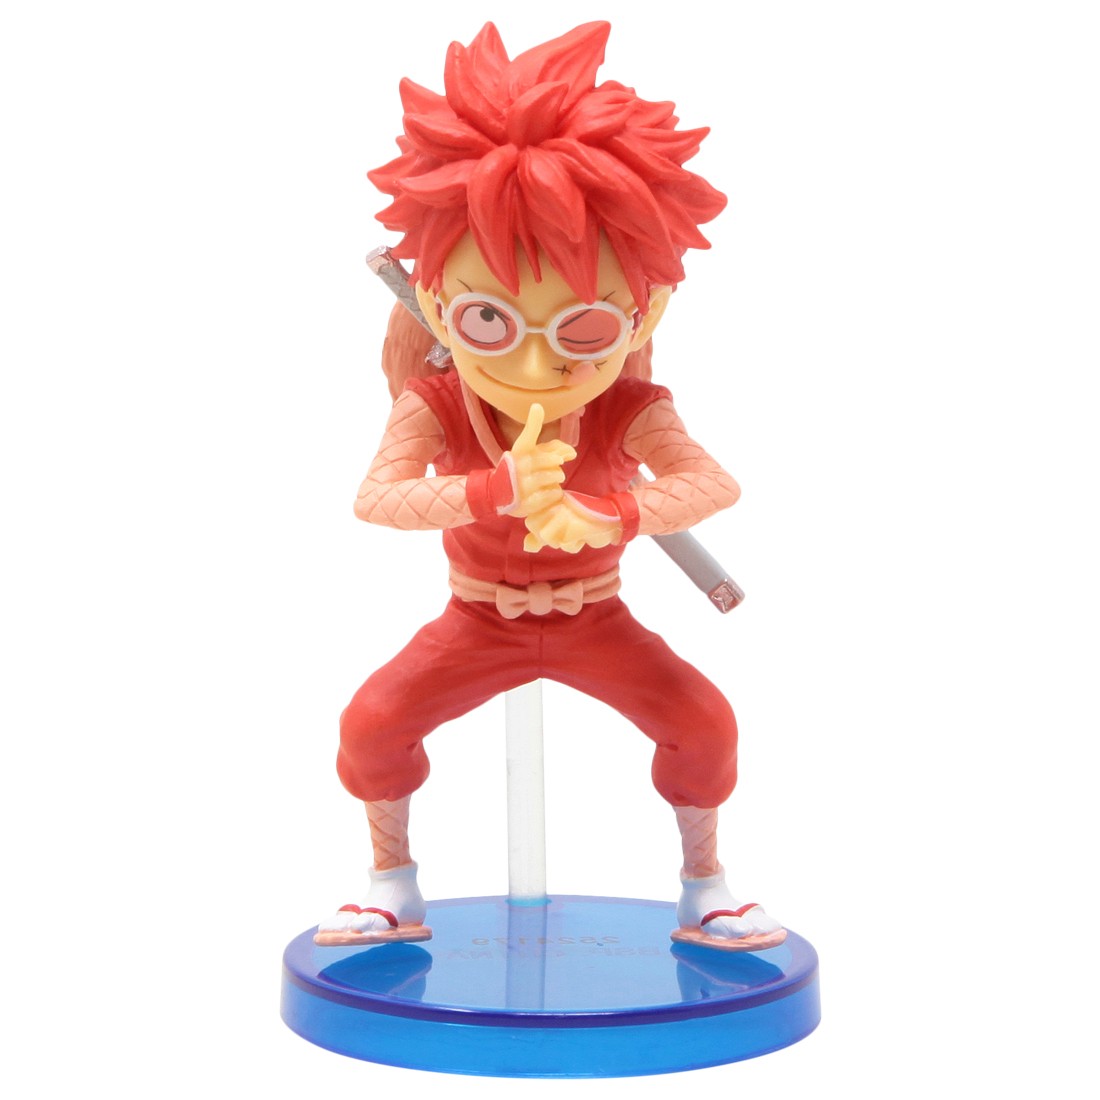 Banpresto One Piece World Collectable Figure WanoKuni Style 1 - A Monkey D. Luffy (red)